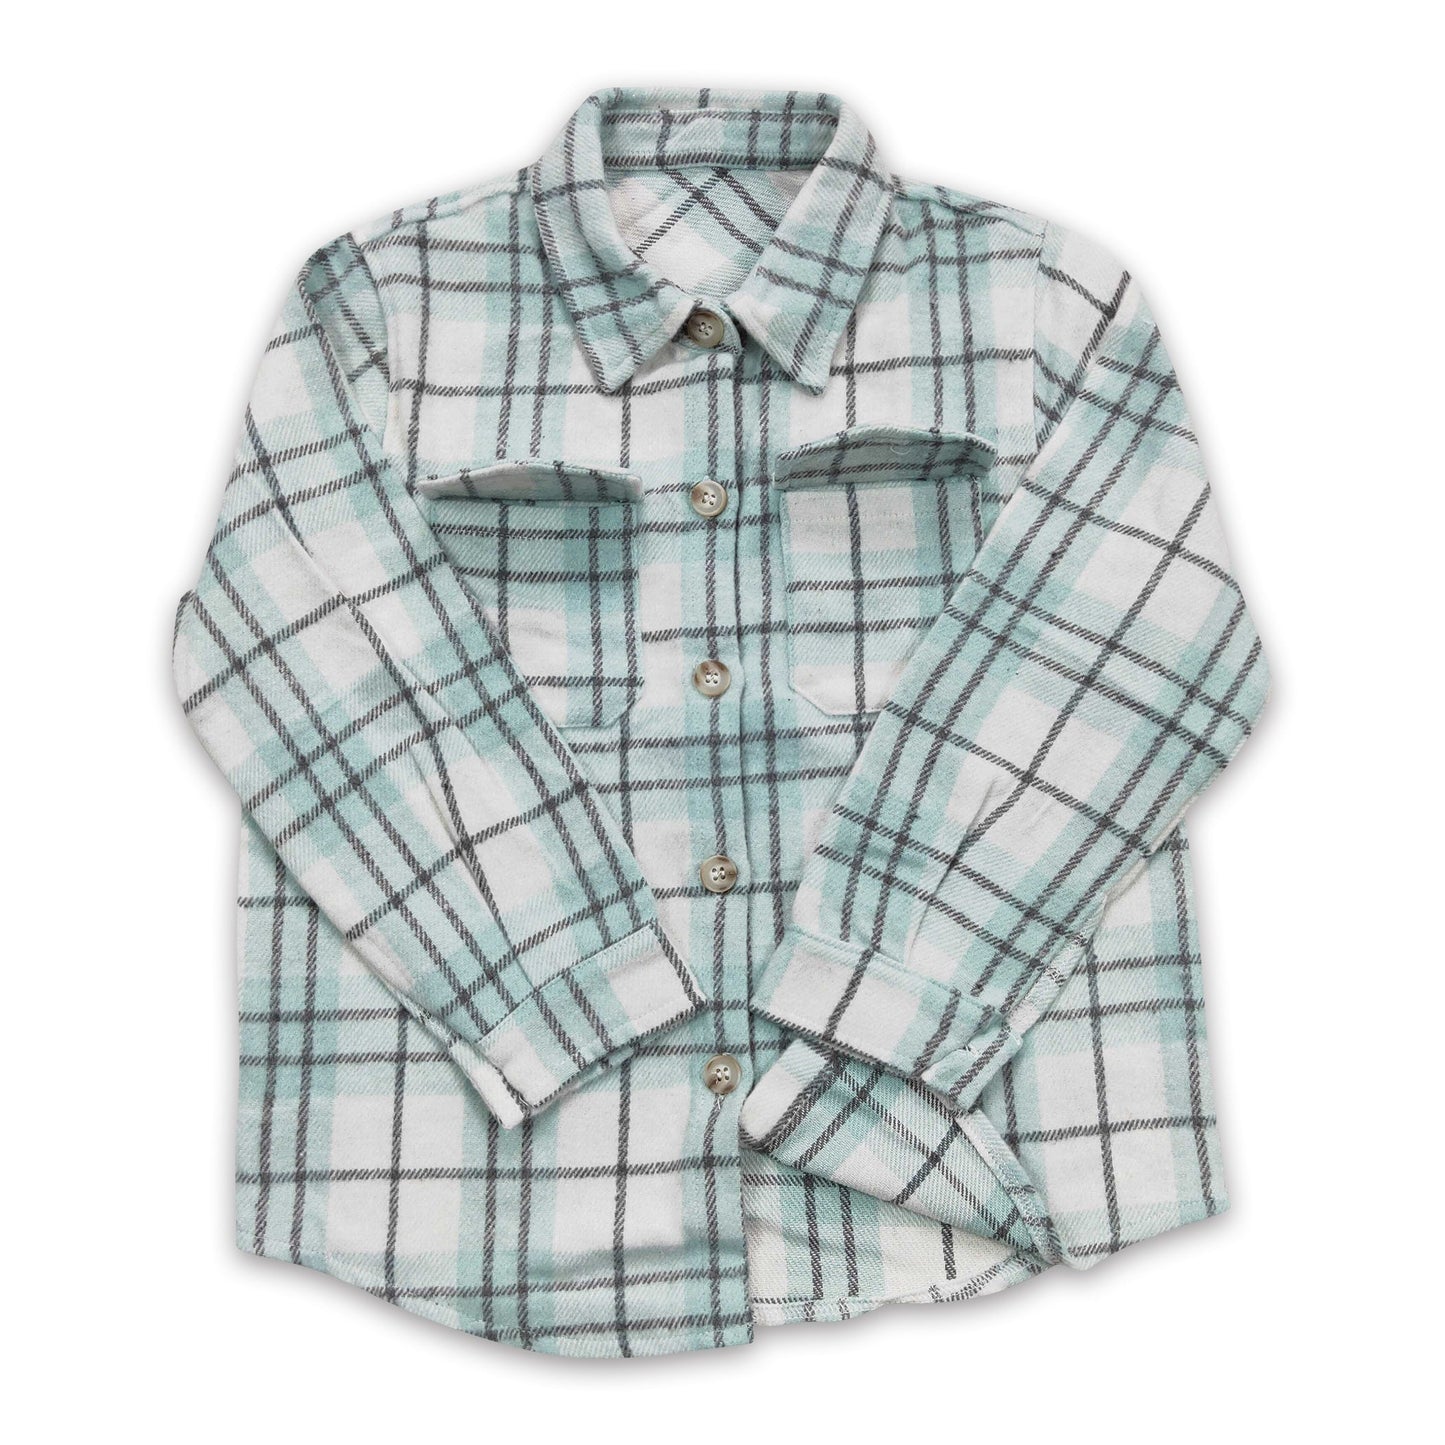 Green plaid cotton pocket boy flannel button up shirt